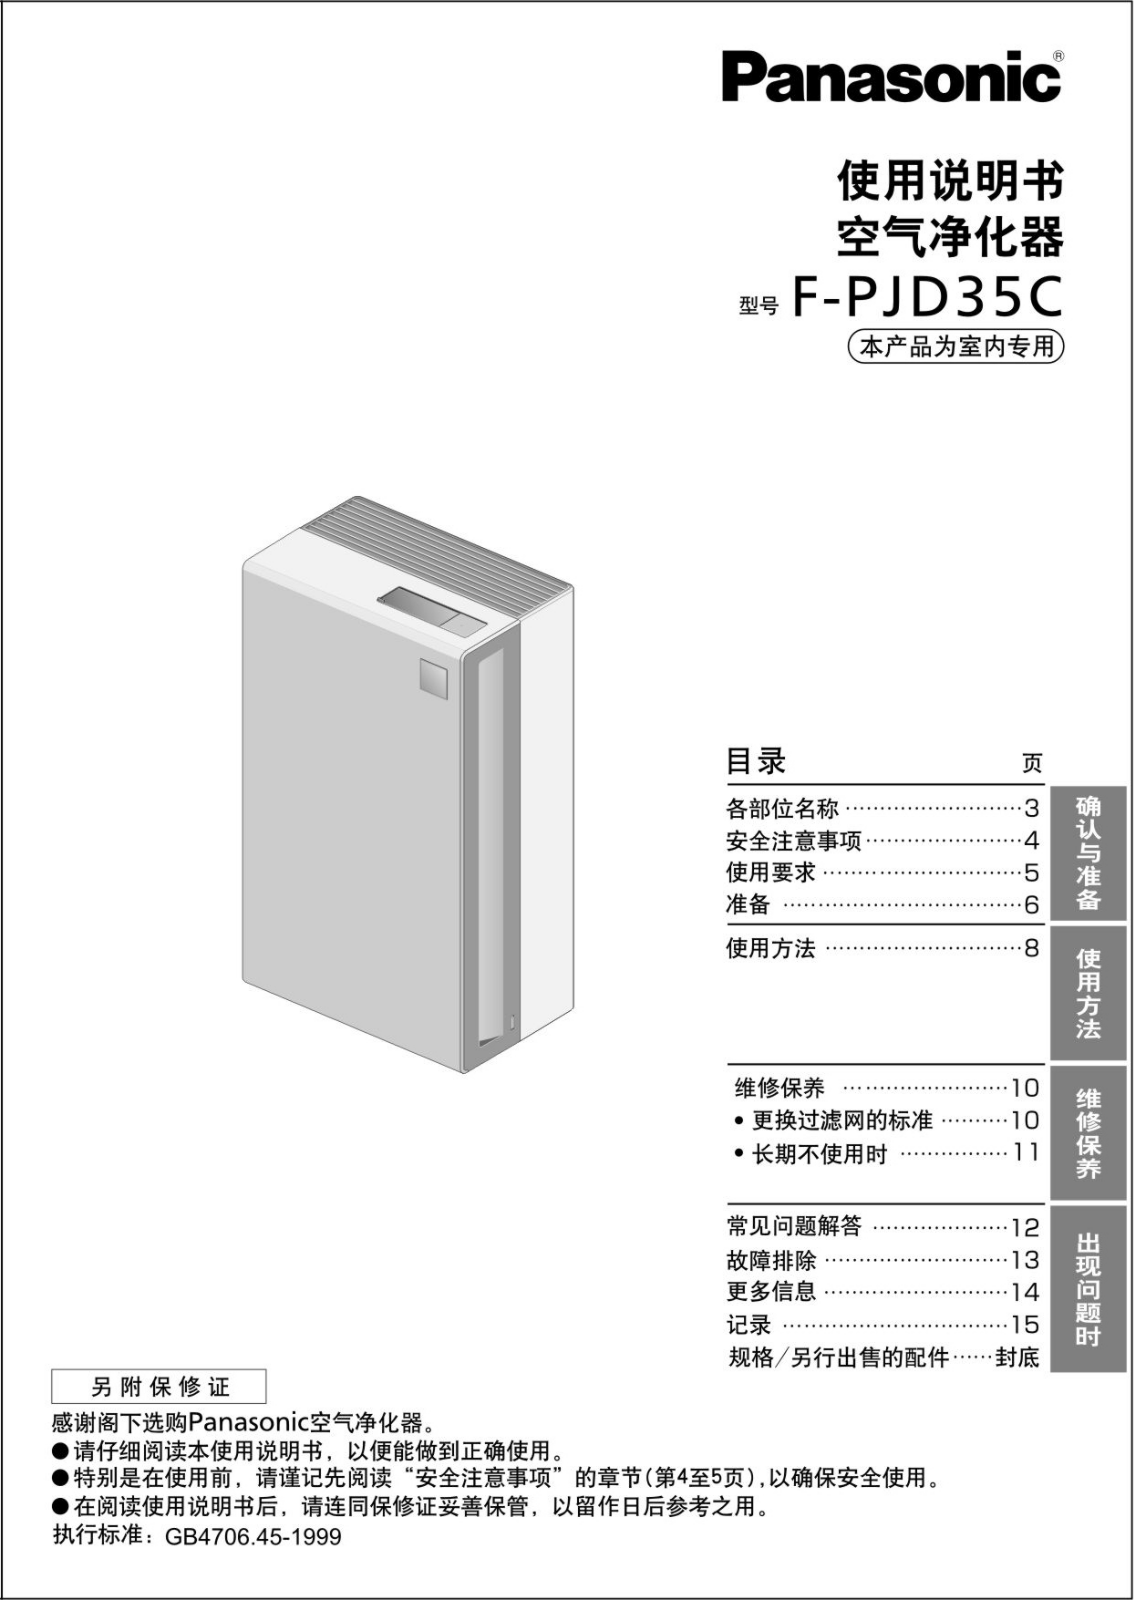 Panasonic F-PJD35C User Manual